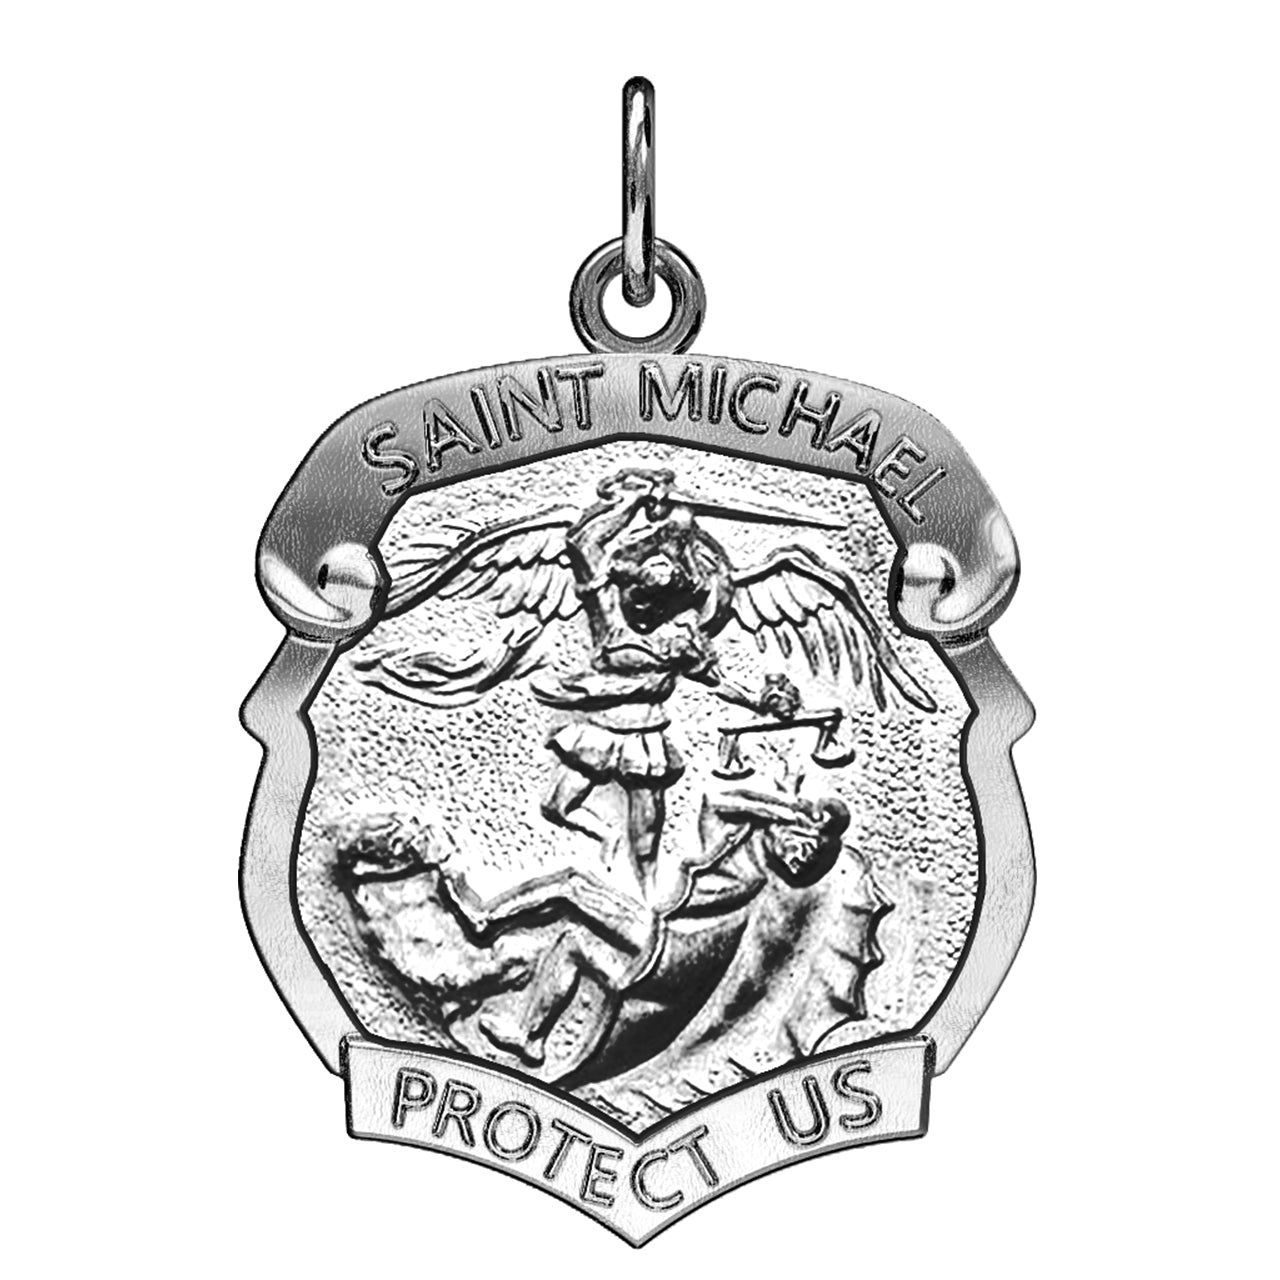 Ladies 925 Sterling Silver Saint Michael Antique Finish Shield Badge Pendant Necklace, 28mm - US Jewels